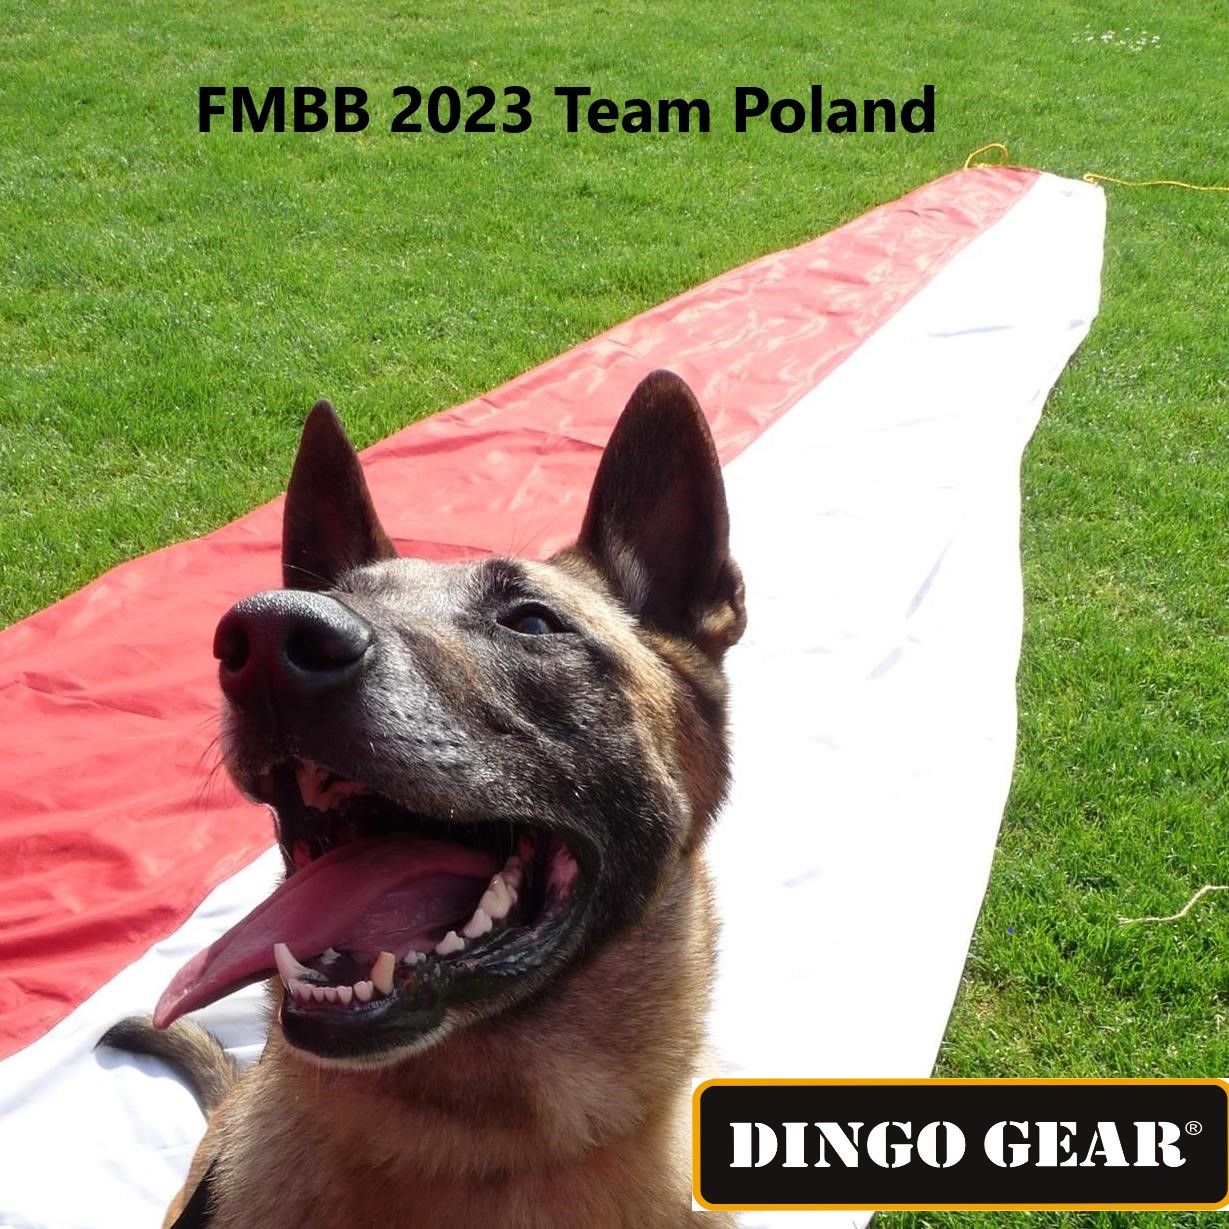 FMBB 2023 in Romania. Poland Team & Dingo Gear